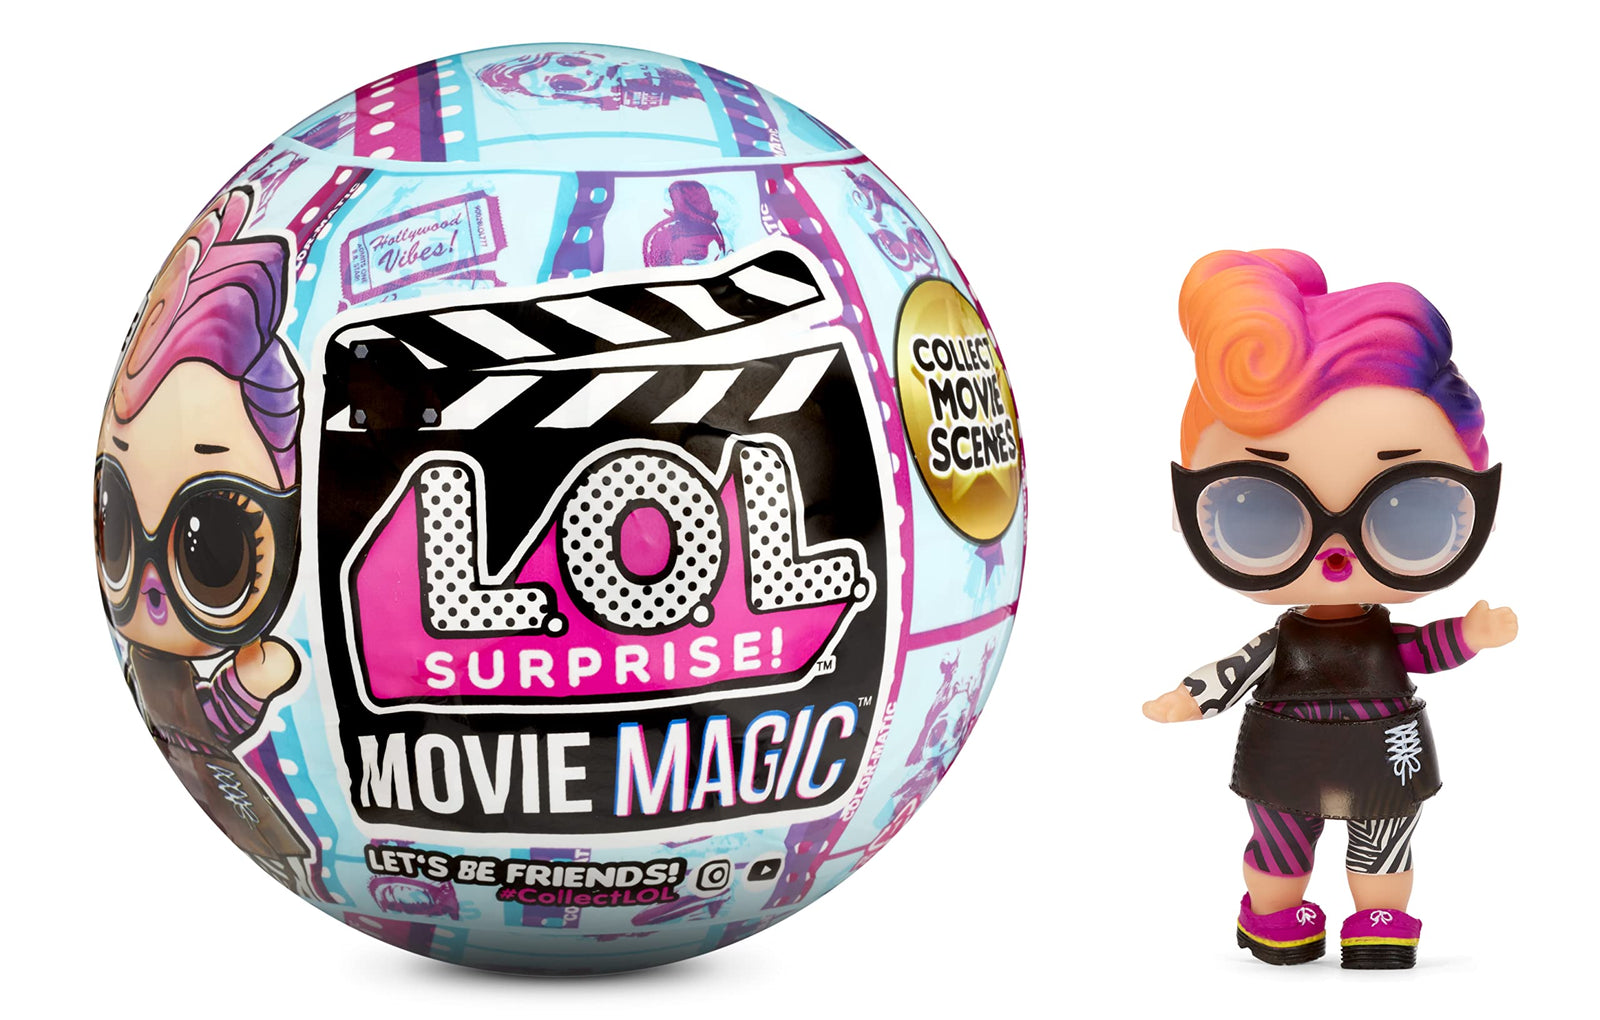 LOL Surprise Movie Magic Doll with 10 Surprises